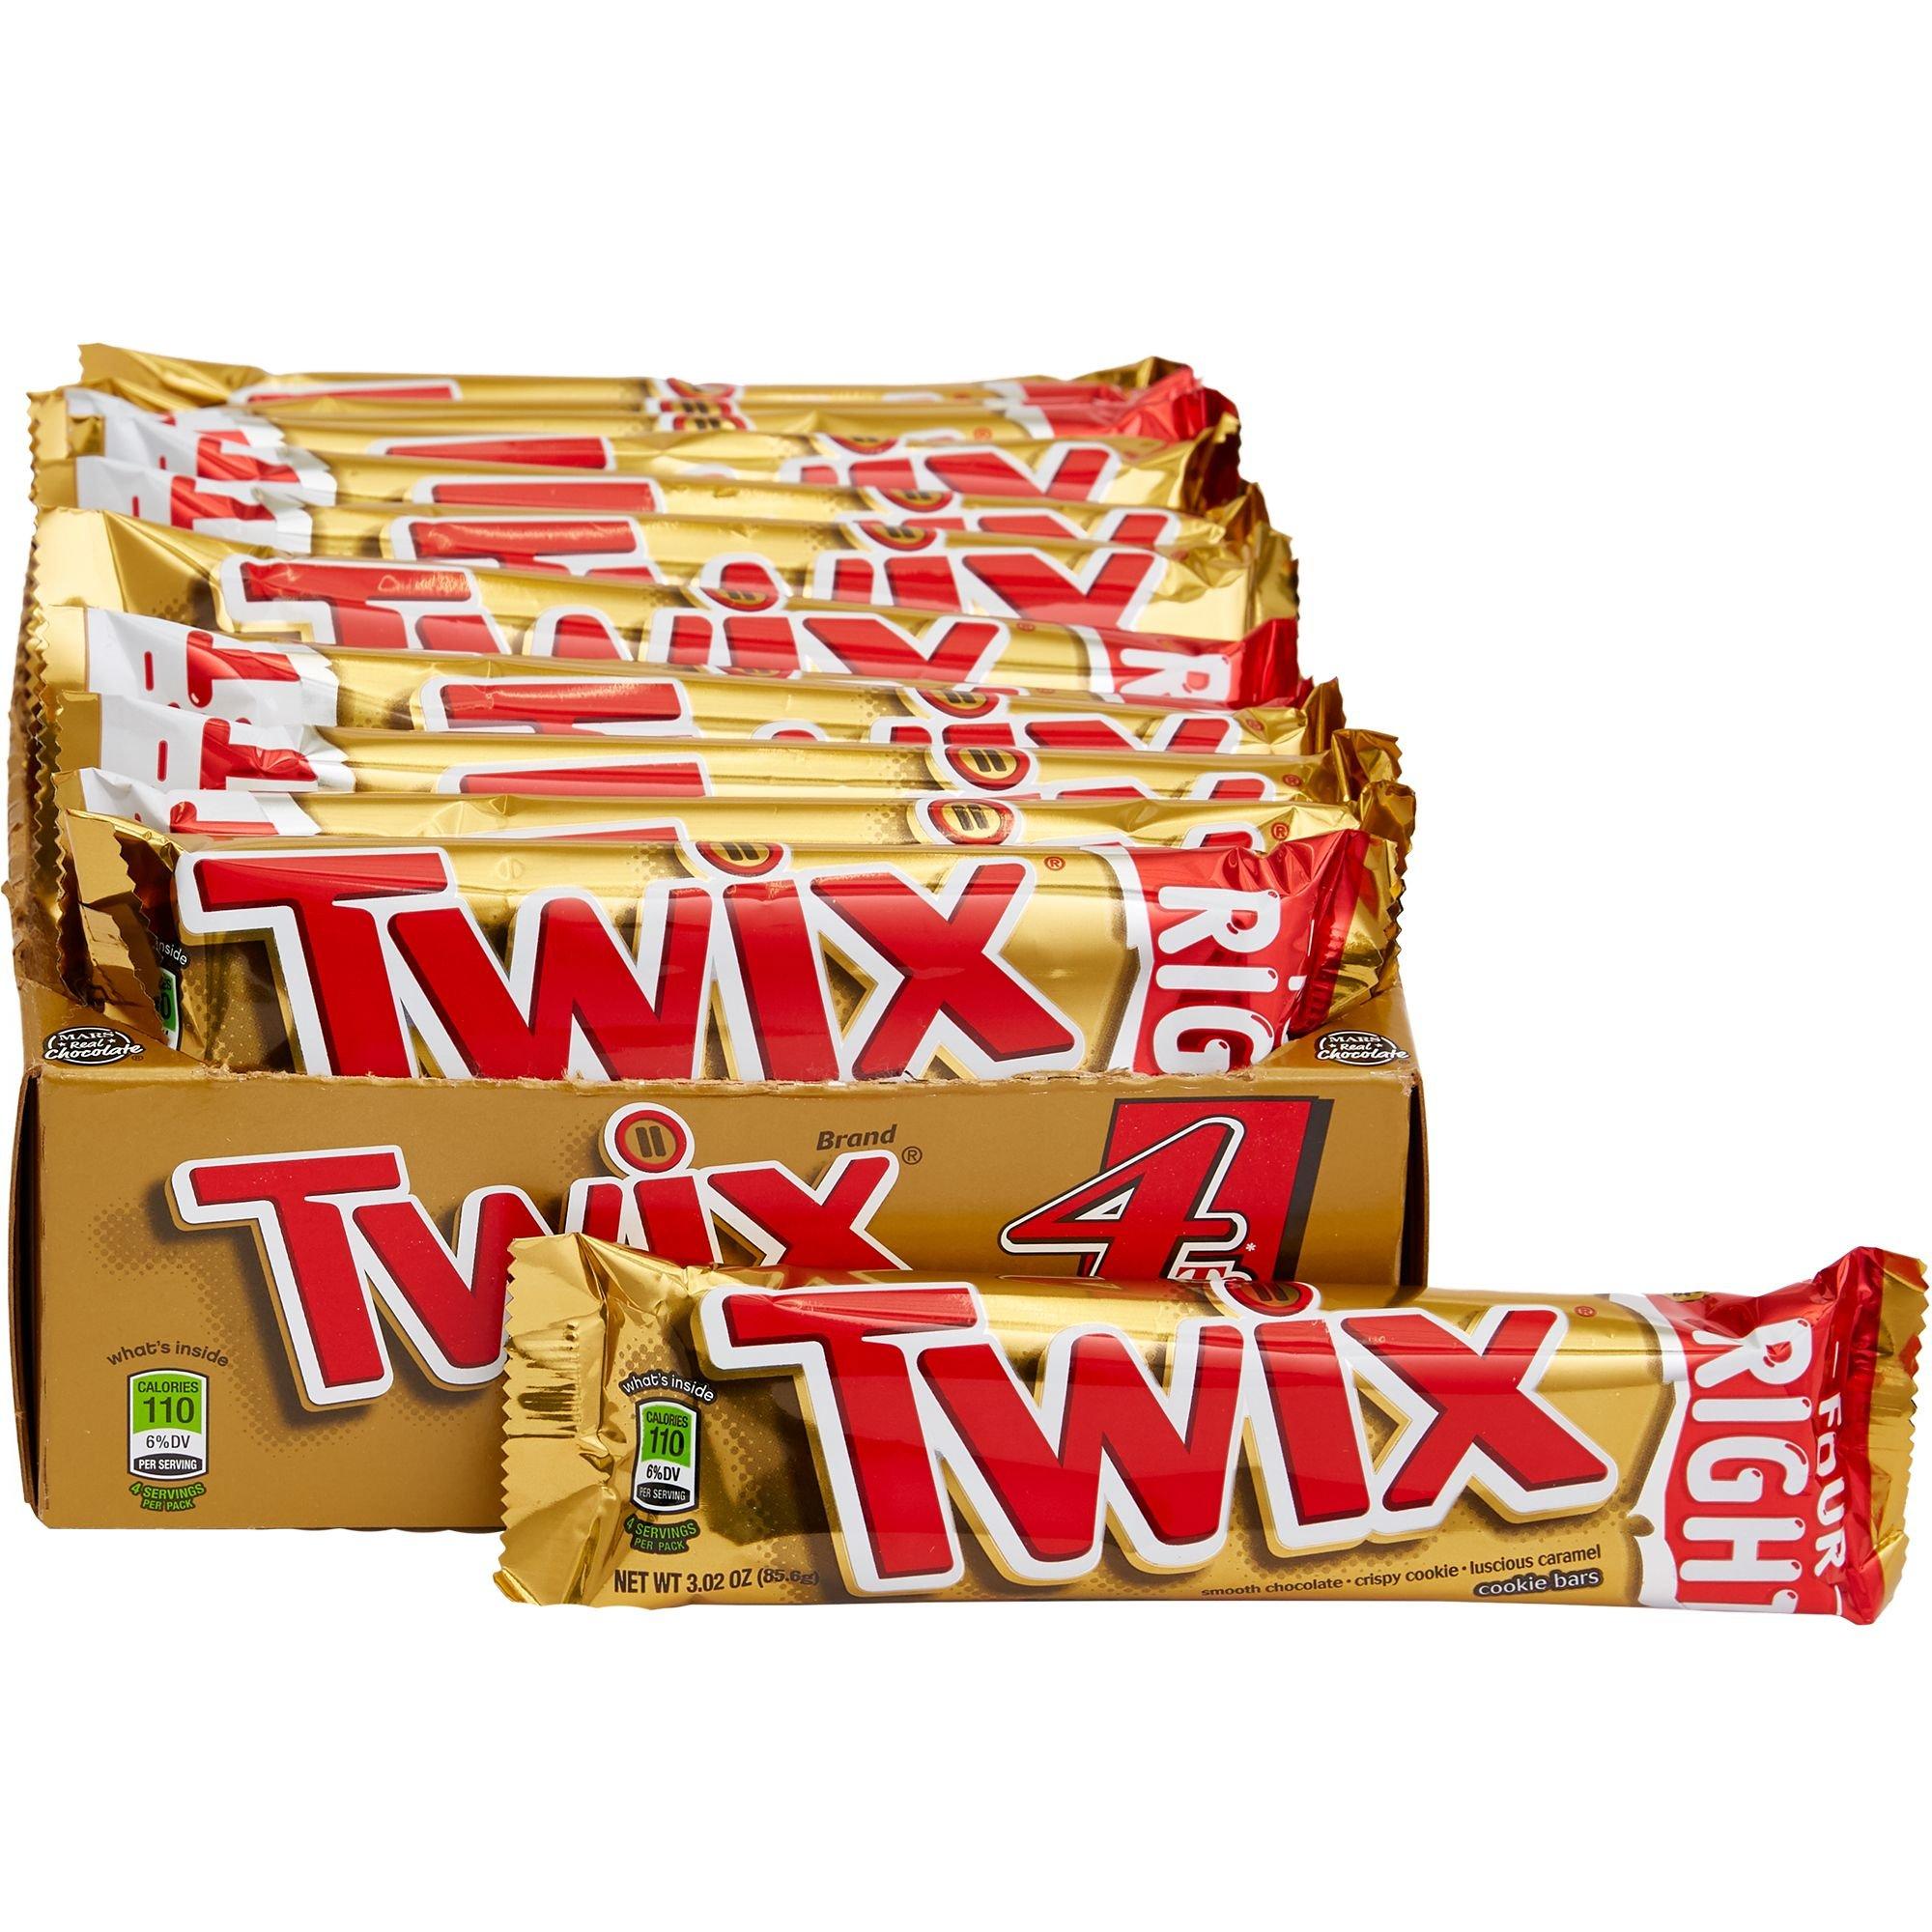 Twix Caramel Chocolate Cookie Share Size Candy Bar, 3.02 oz - Pick 'n Save